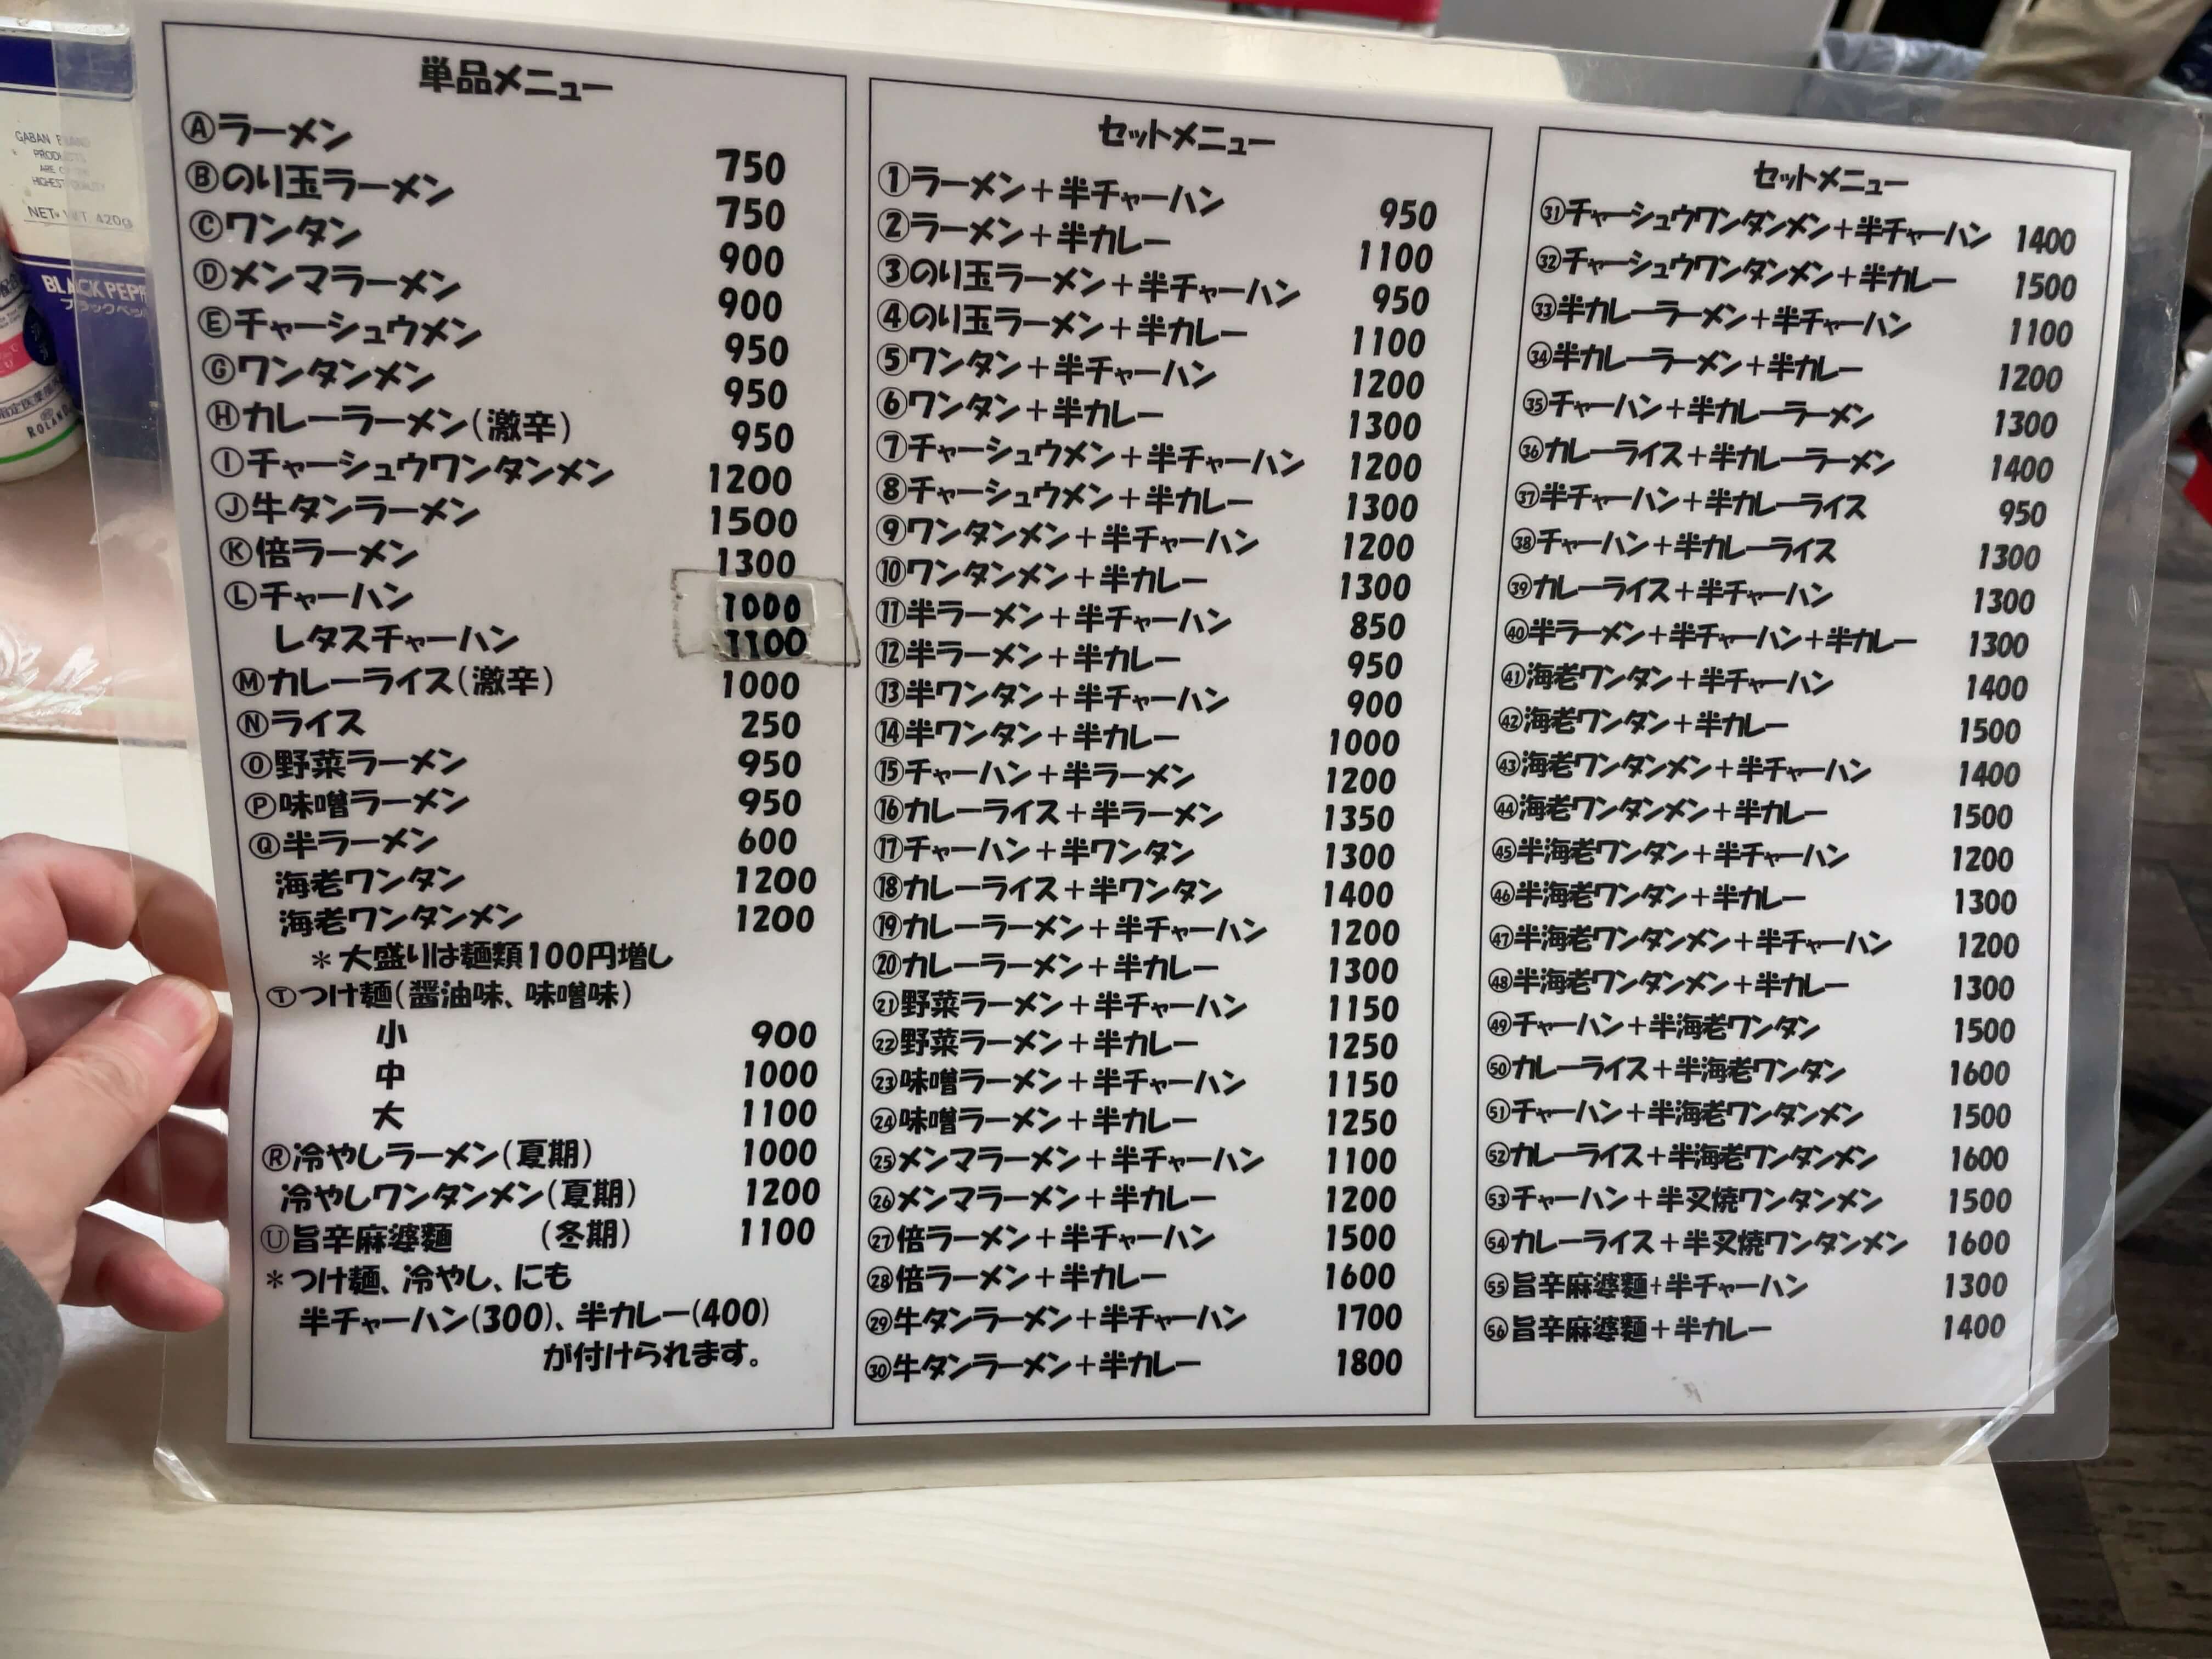 ザ・ラーメン屋　menu